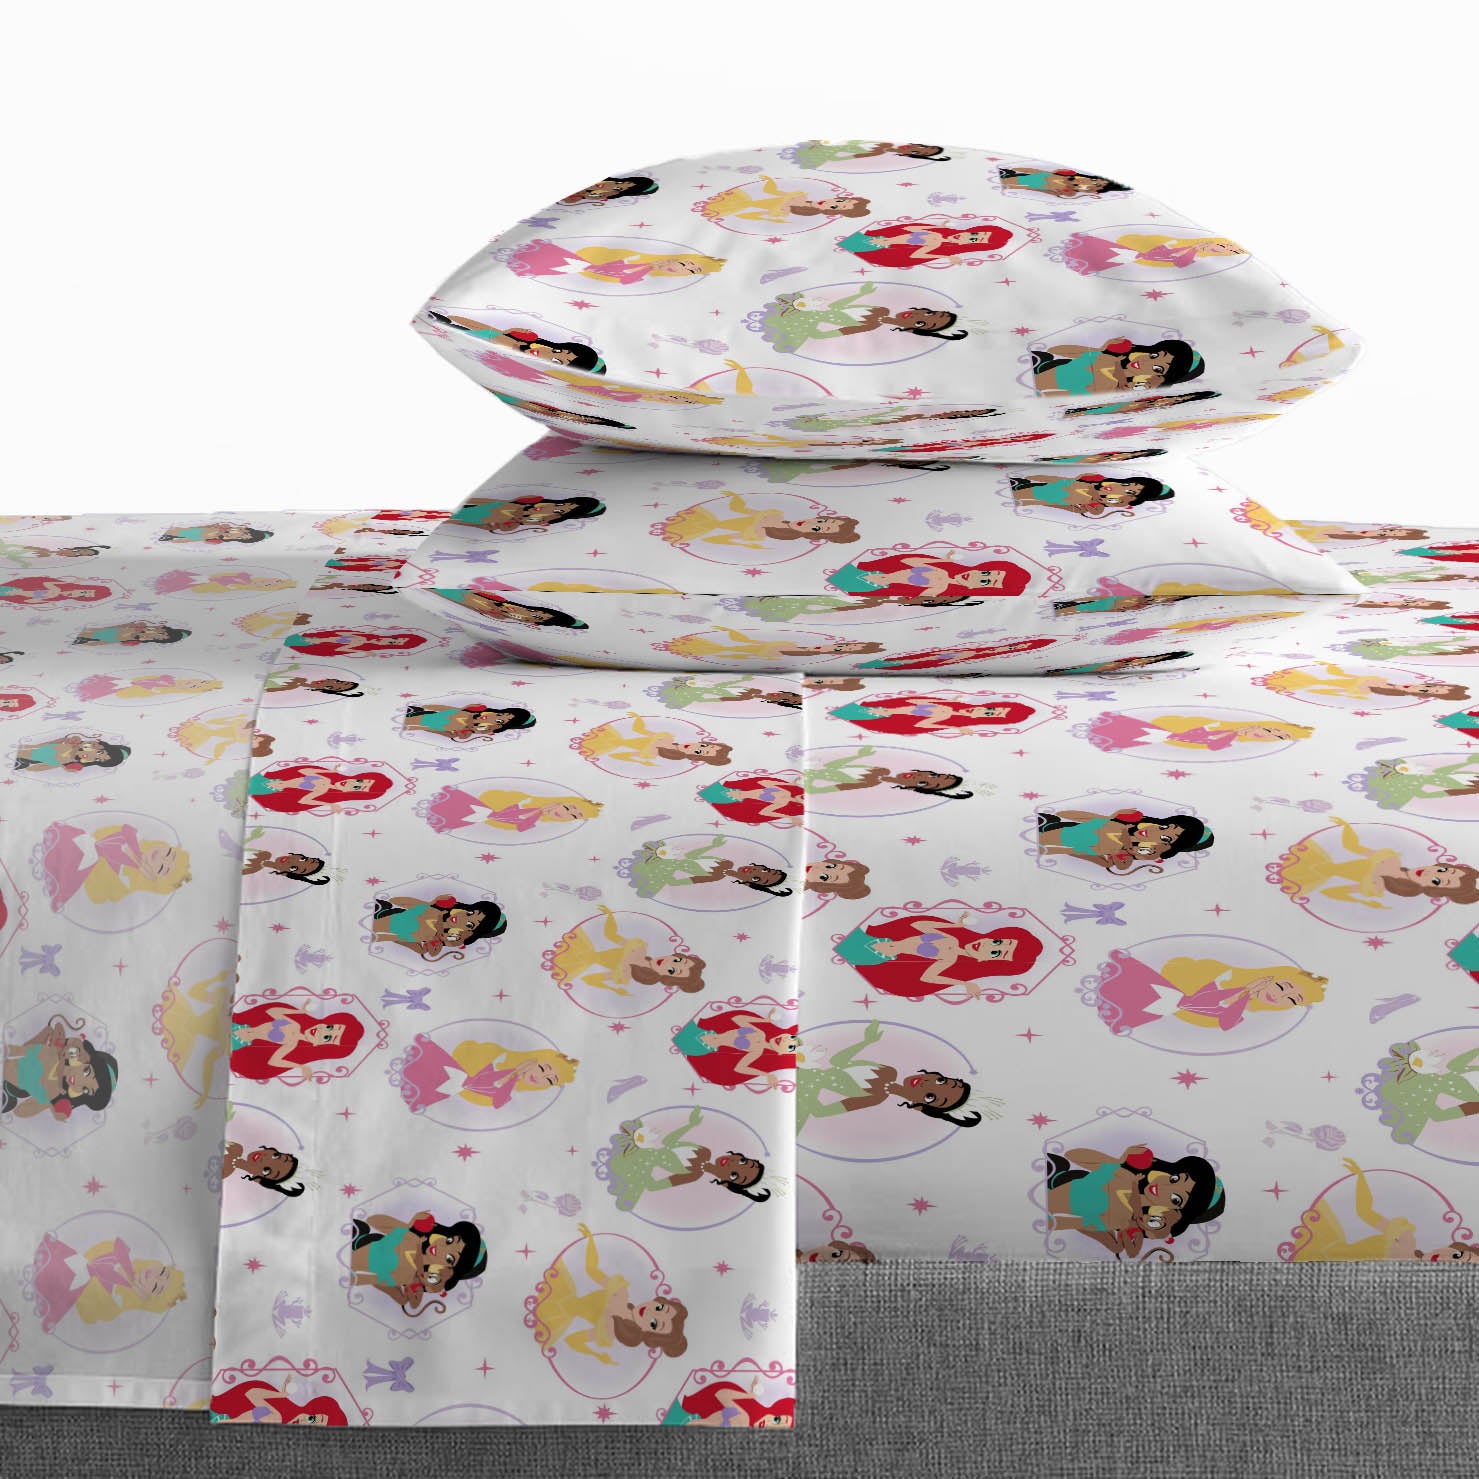 Saturday Park Disney Princess Besties 100% Organic Cotton Bed Set